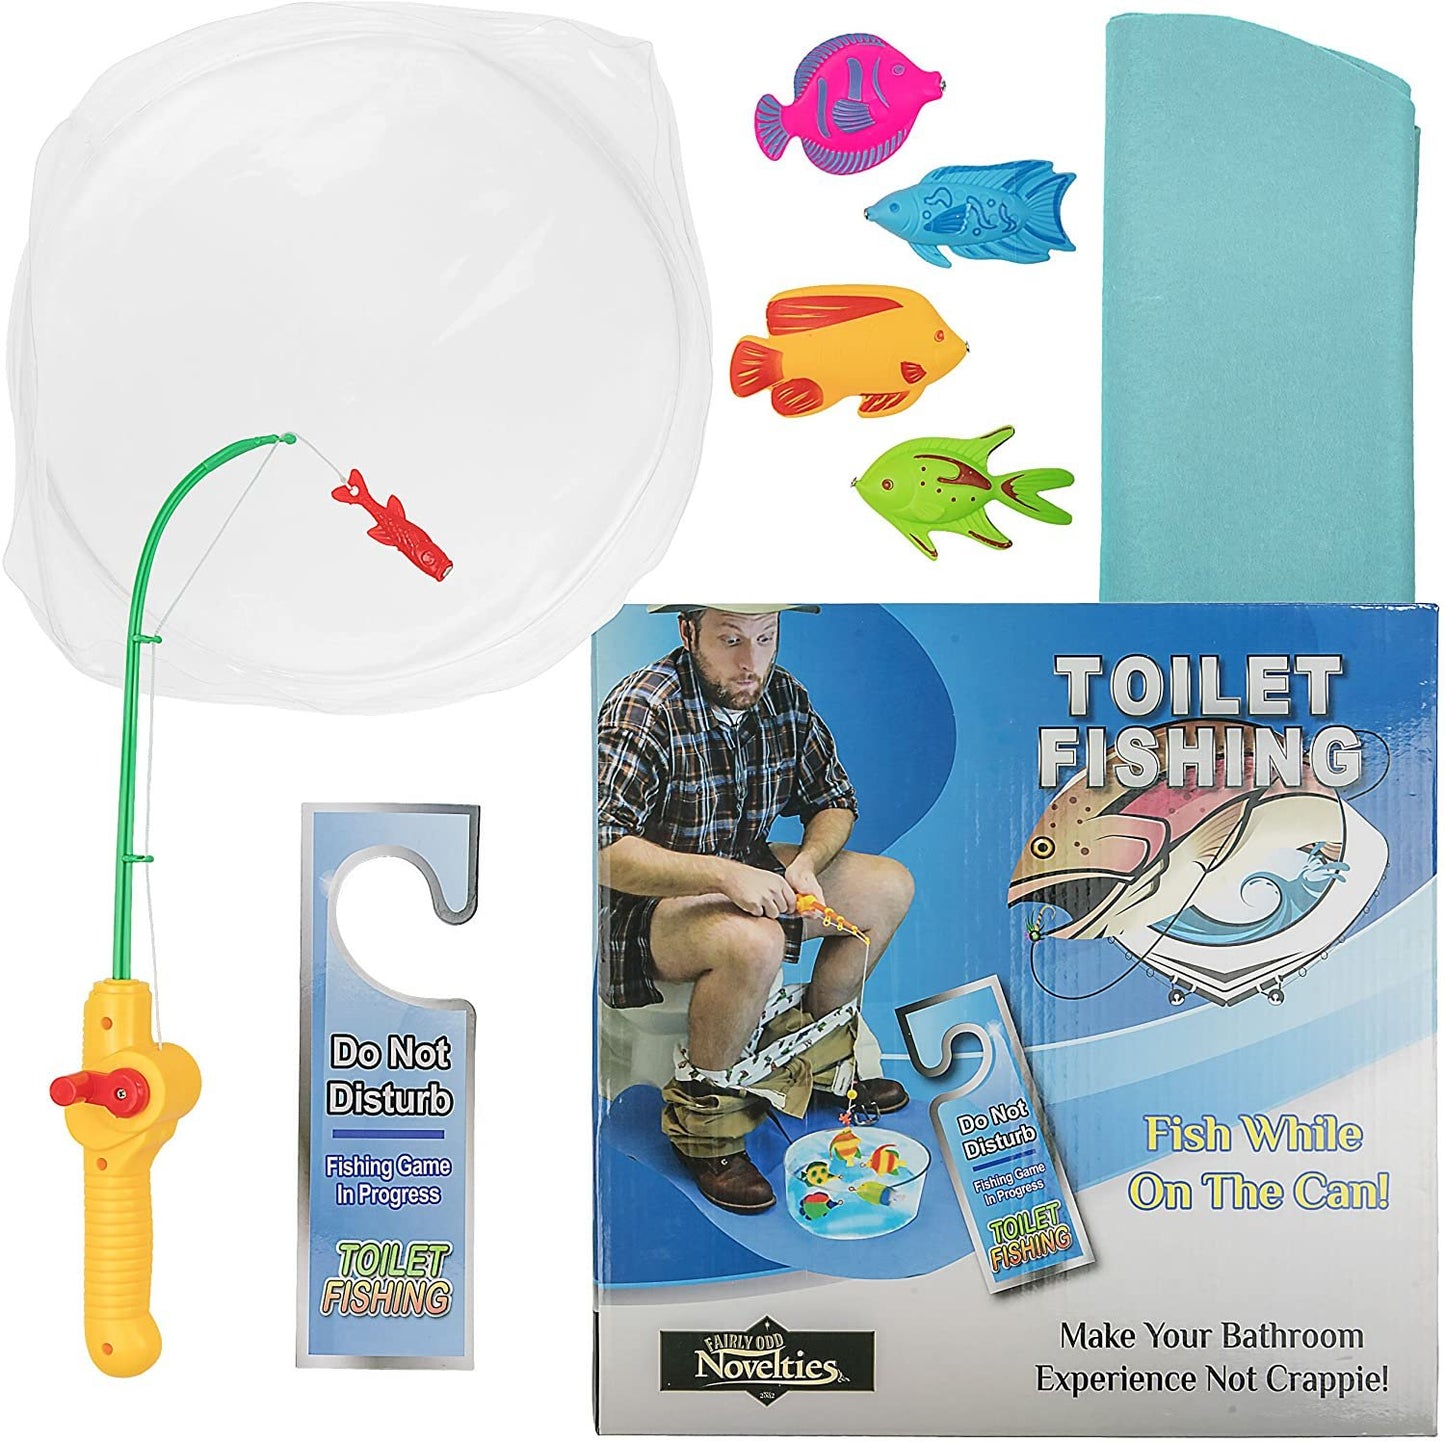 Potty Fisher Toilet Fishing Game - Fairly Odd Novelties - Funny Novelty Gag Joke Bathroom Gift